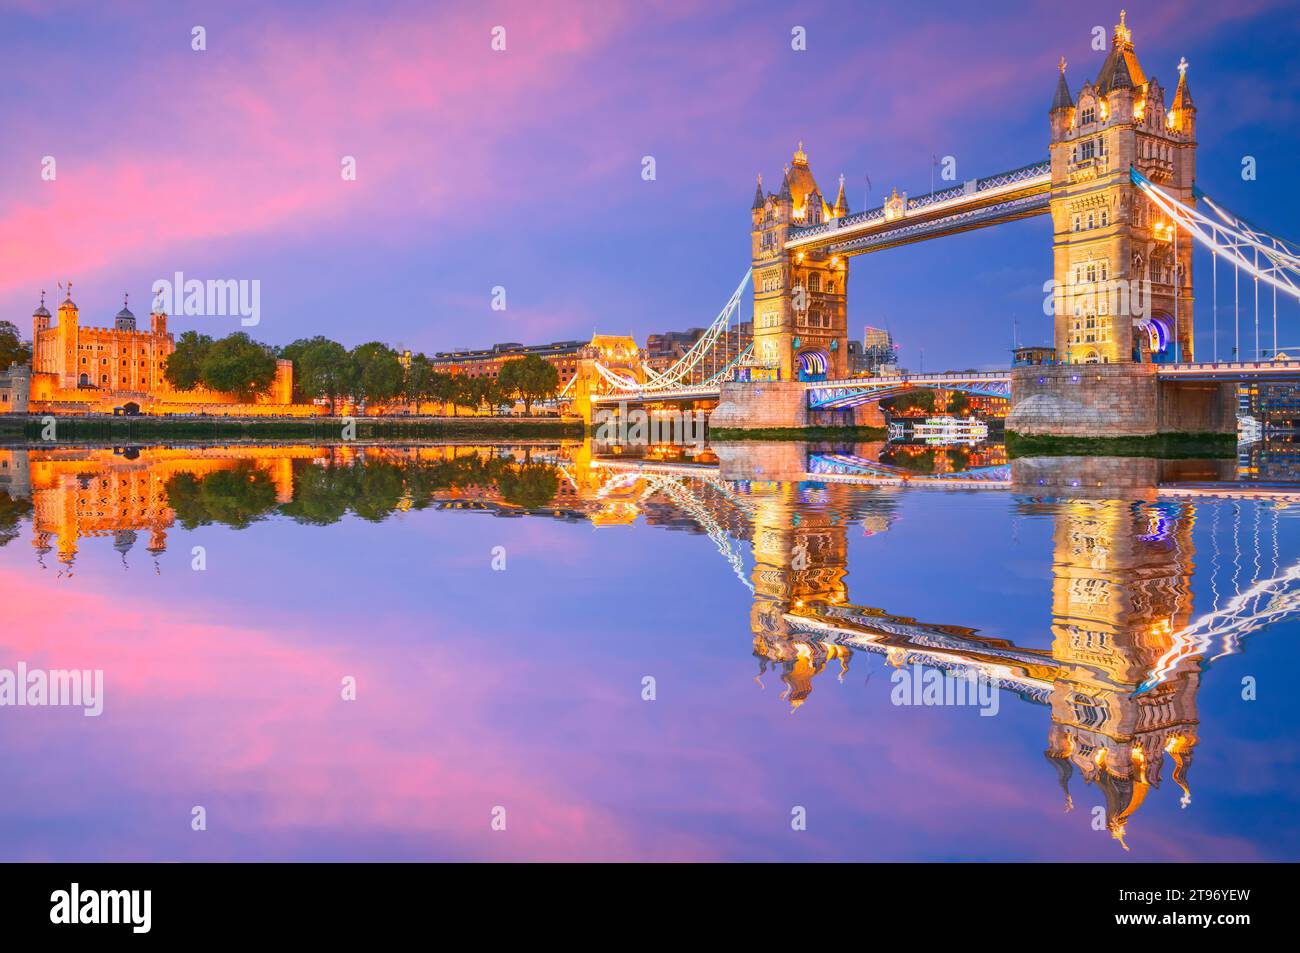 London, United Kingdom. The Tower of London and Tower Bridge reflection on river Thames, England capital spotlight, twilight illuminated scene. Stock Photo